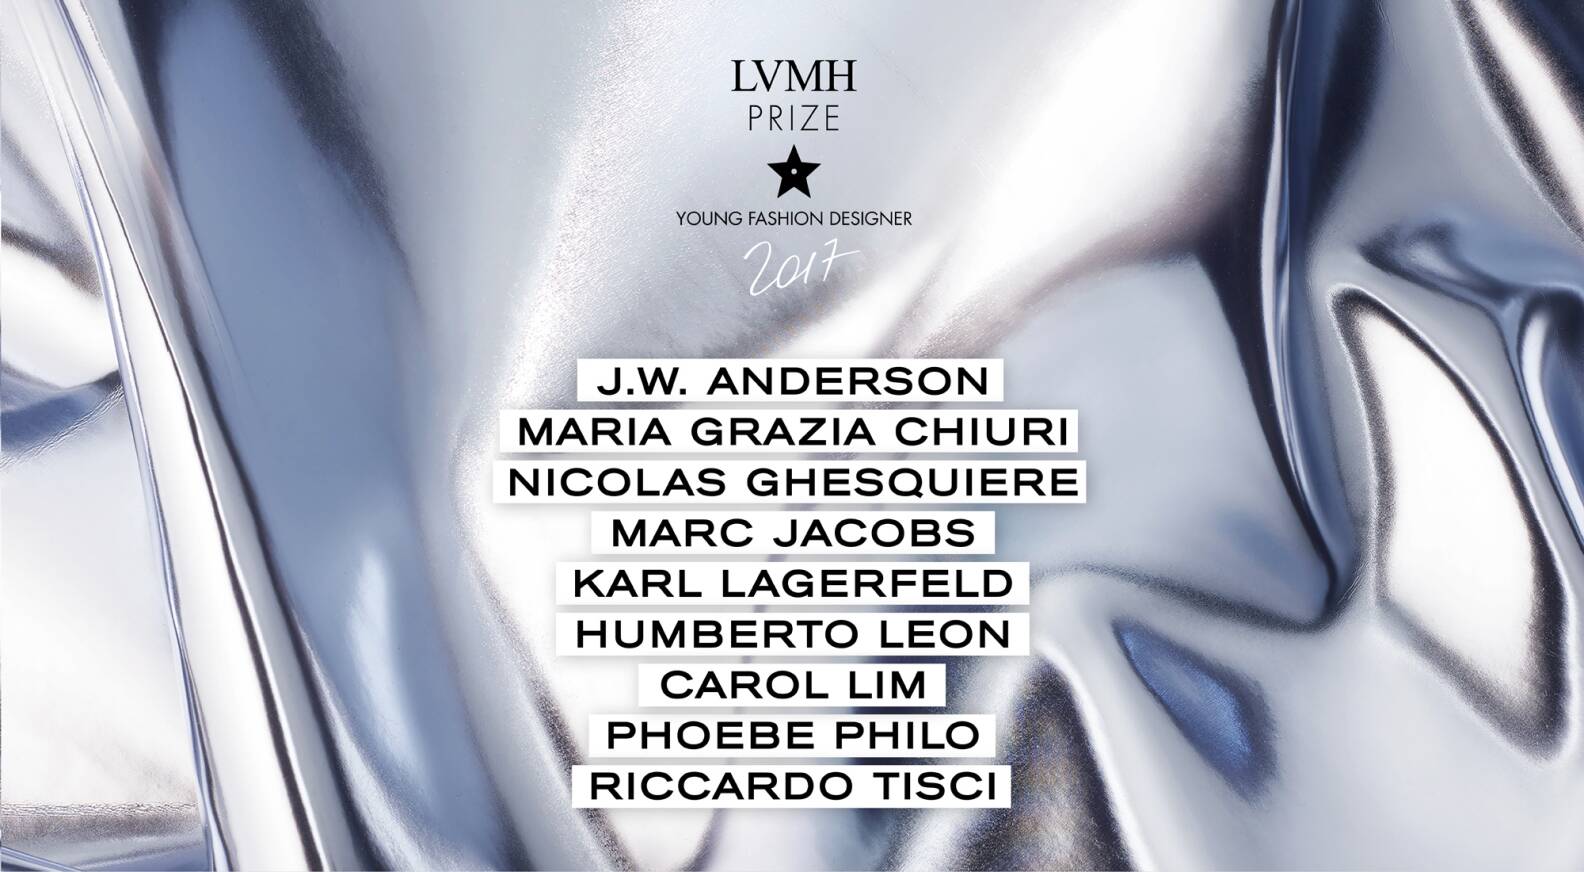 LVMH: The Leader In Modern Luxury (undefined:LVMHF)